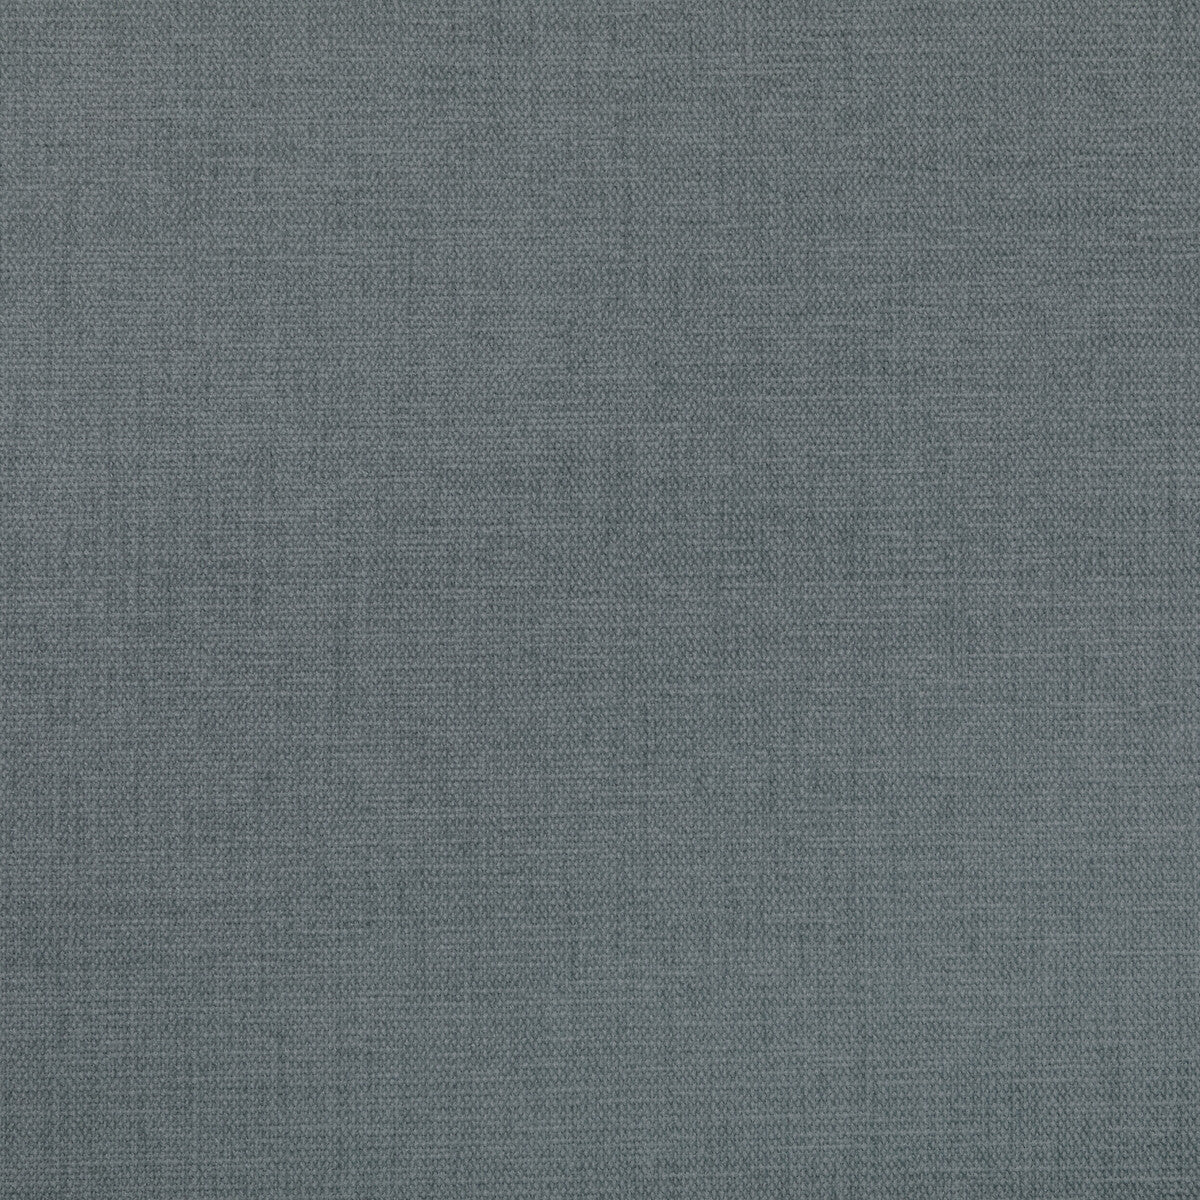 Kravet Smart fabric in 34959-505 color - pattern 34959.505.0 - by Kravet Smart in the Performance Kravetarmor collection